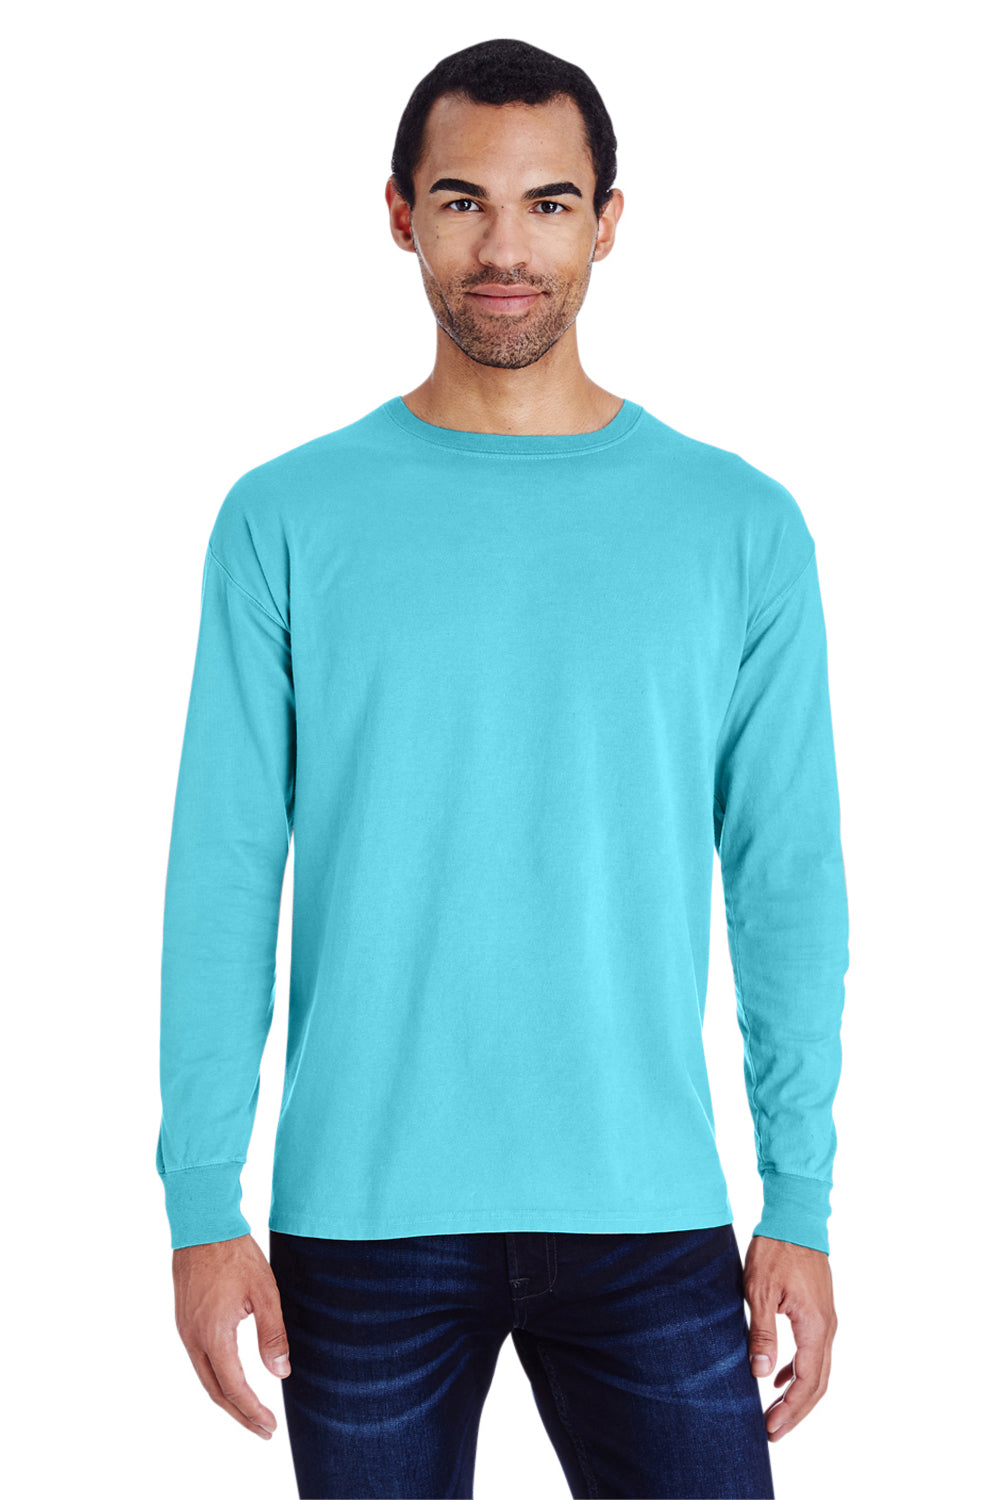 ComfortWash by Hanes GDH200 Long Sleeve Crewneck T-Shirt Freshwater Blue Front